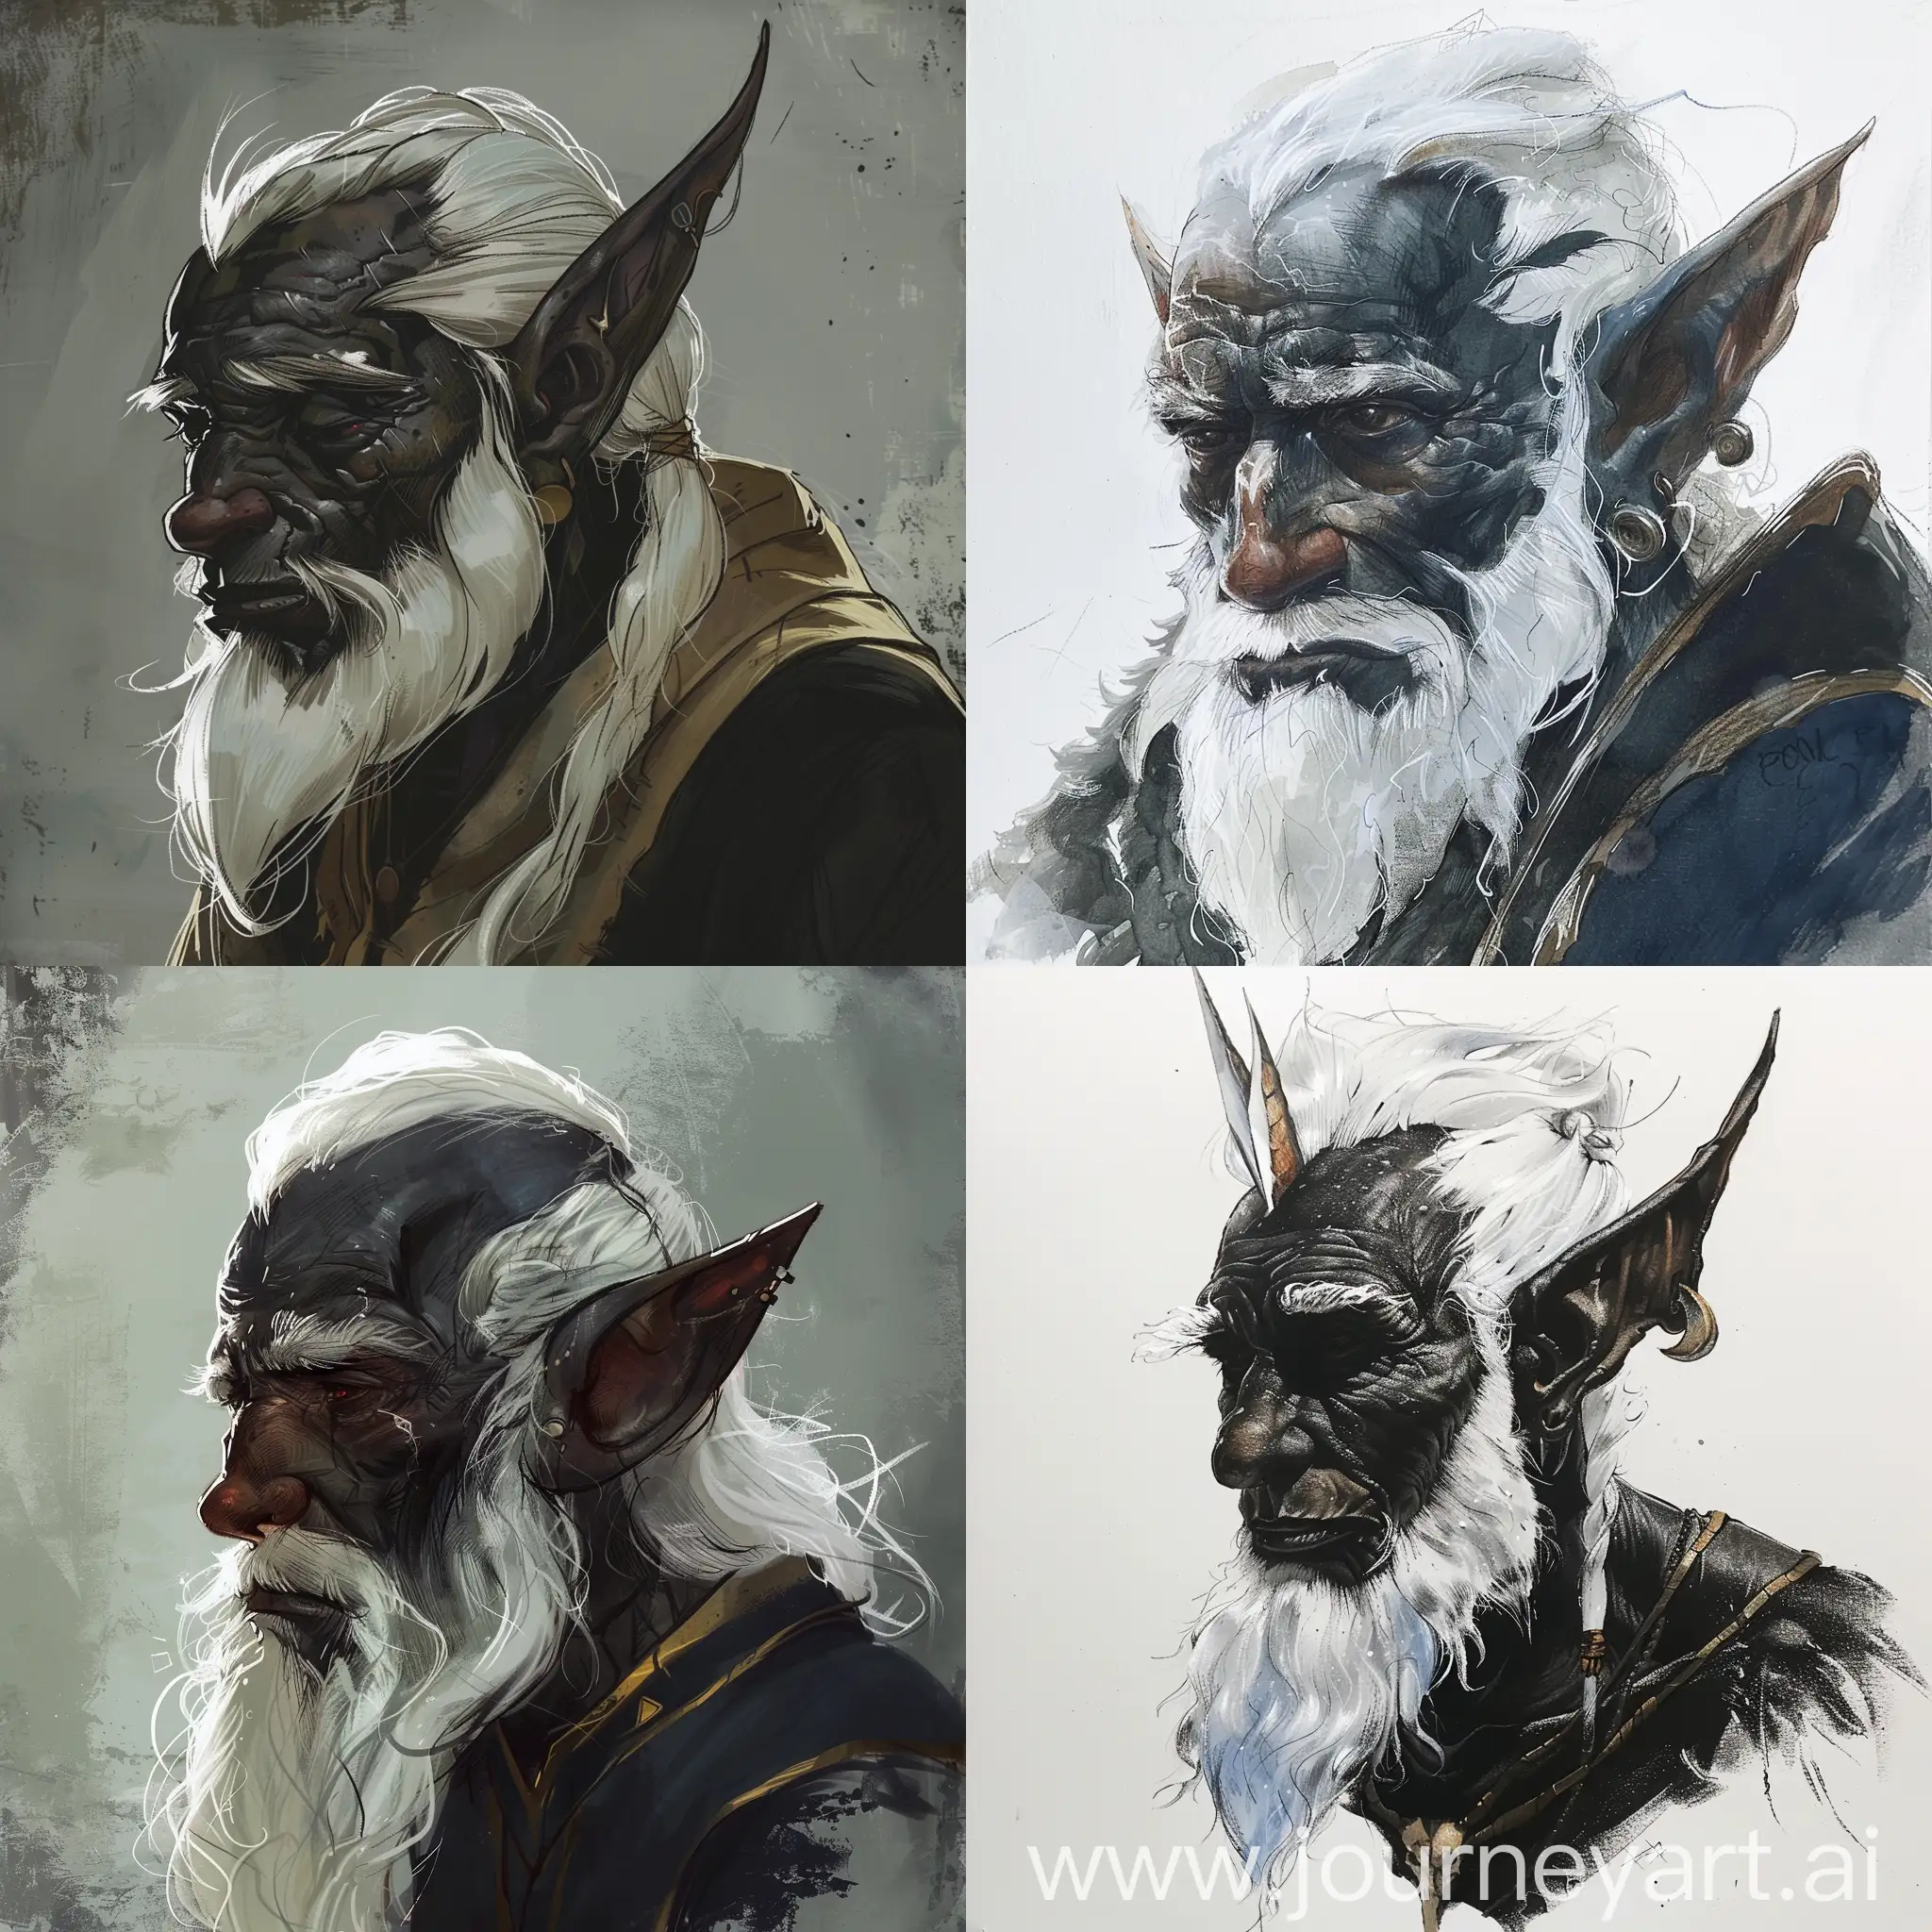 Elvish-Dwarf-with-Black-Skin-and-White-Hair